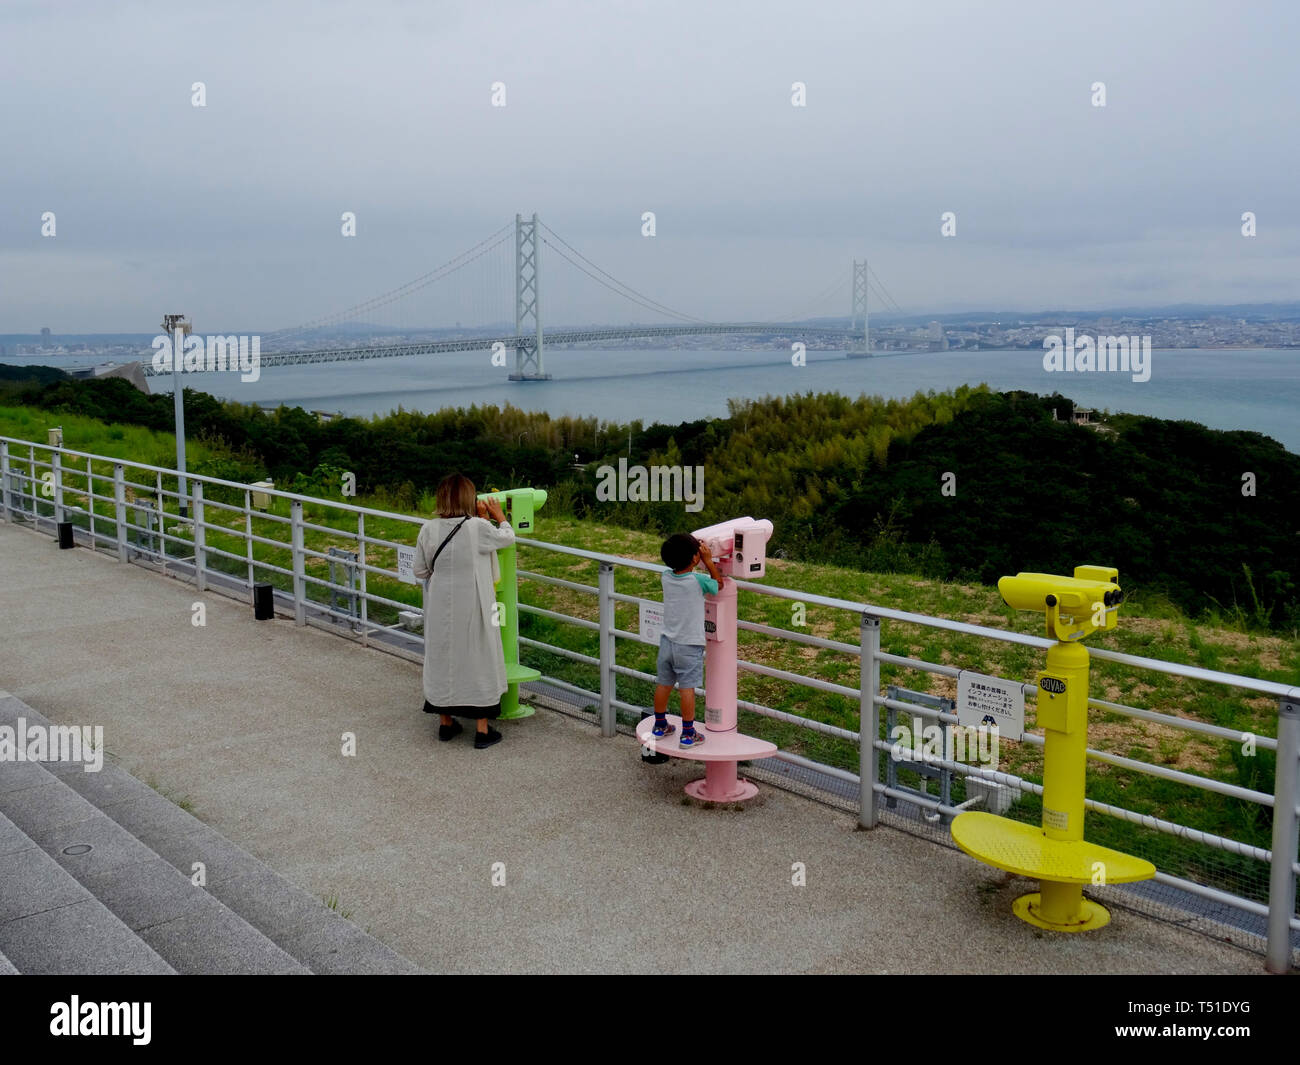 Awaji, Hyogo, Japan - 17th September 2018 : View on the Akashi Kaikyō Bridge and some toursit looking through the binoculars from the Awaji Service Ar Stock Photo